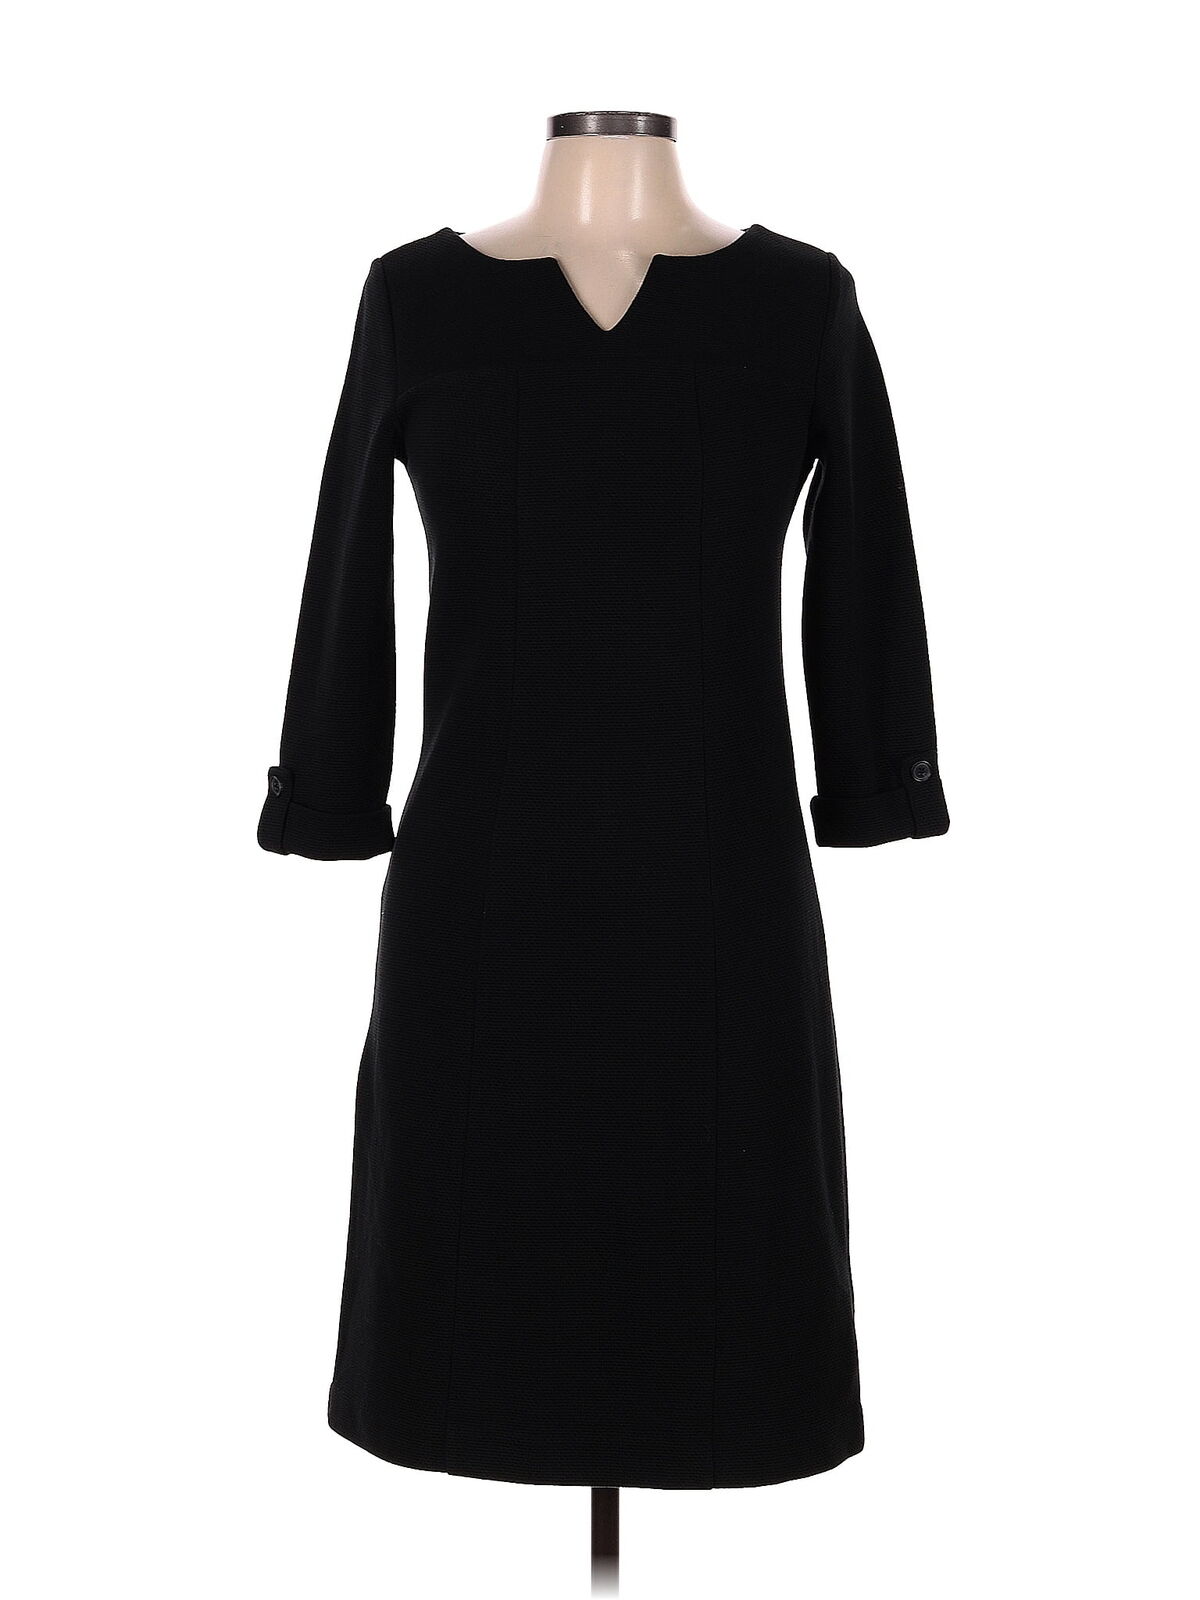 Boden Women Black Casual Dress 6 - image 1